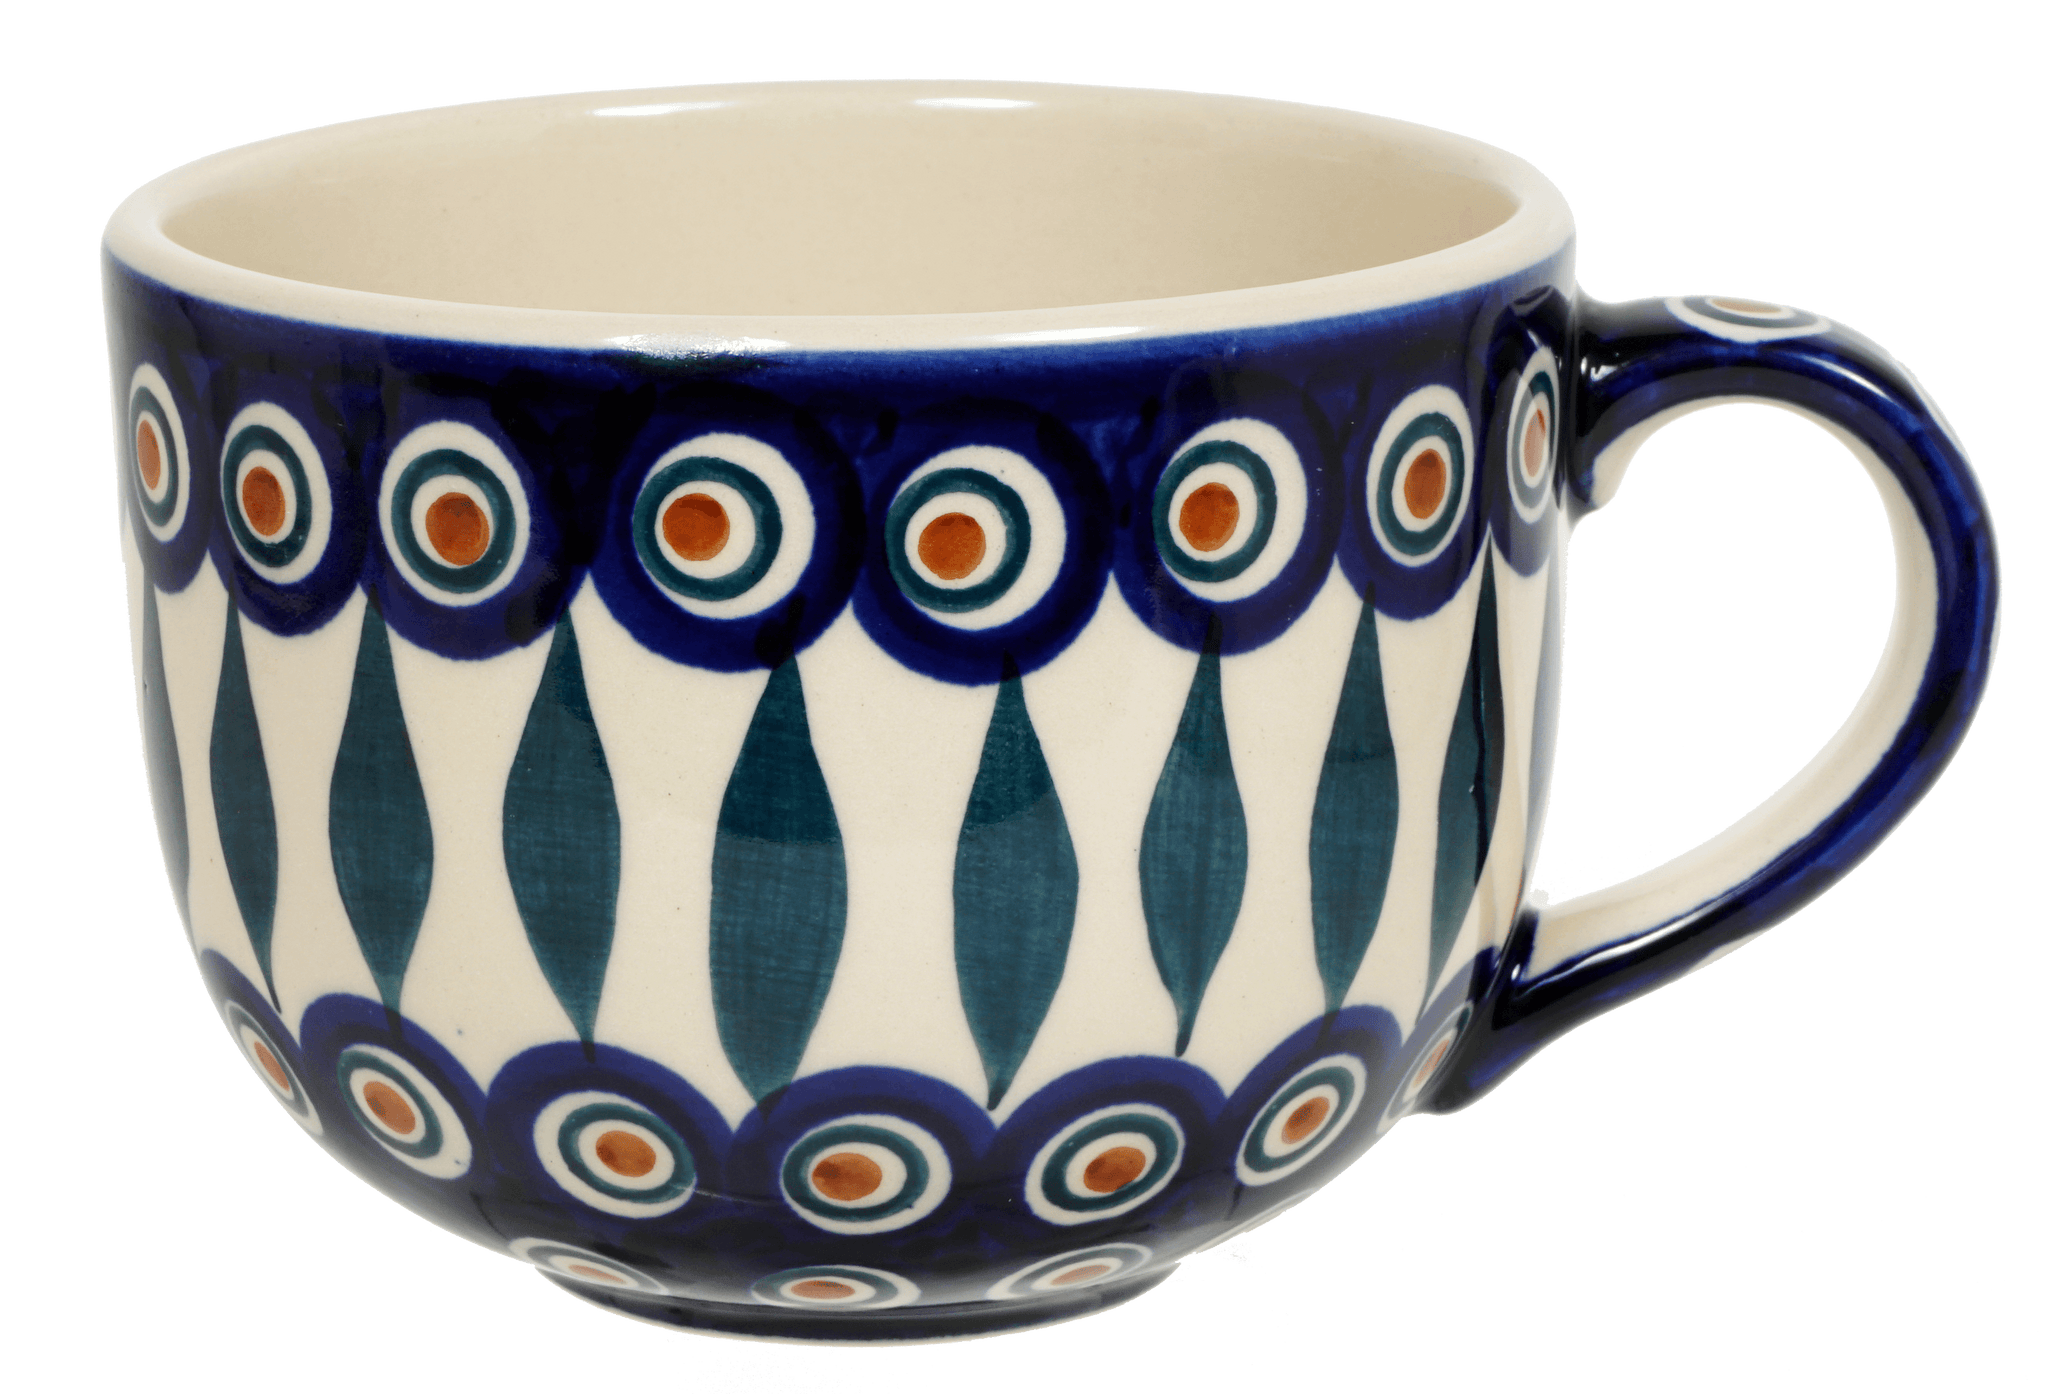 Polish Pottery - John's Mug - Peacock - The Polish Pottery Outlet